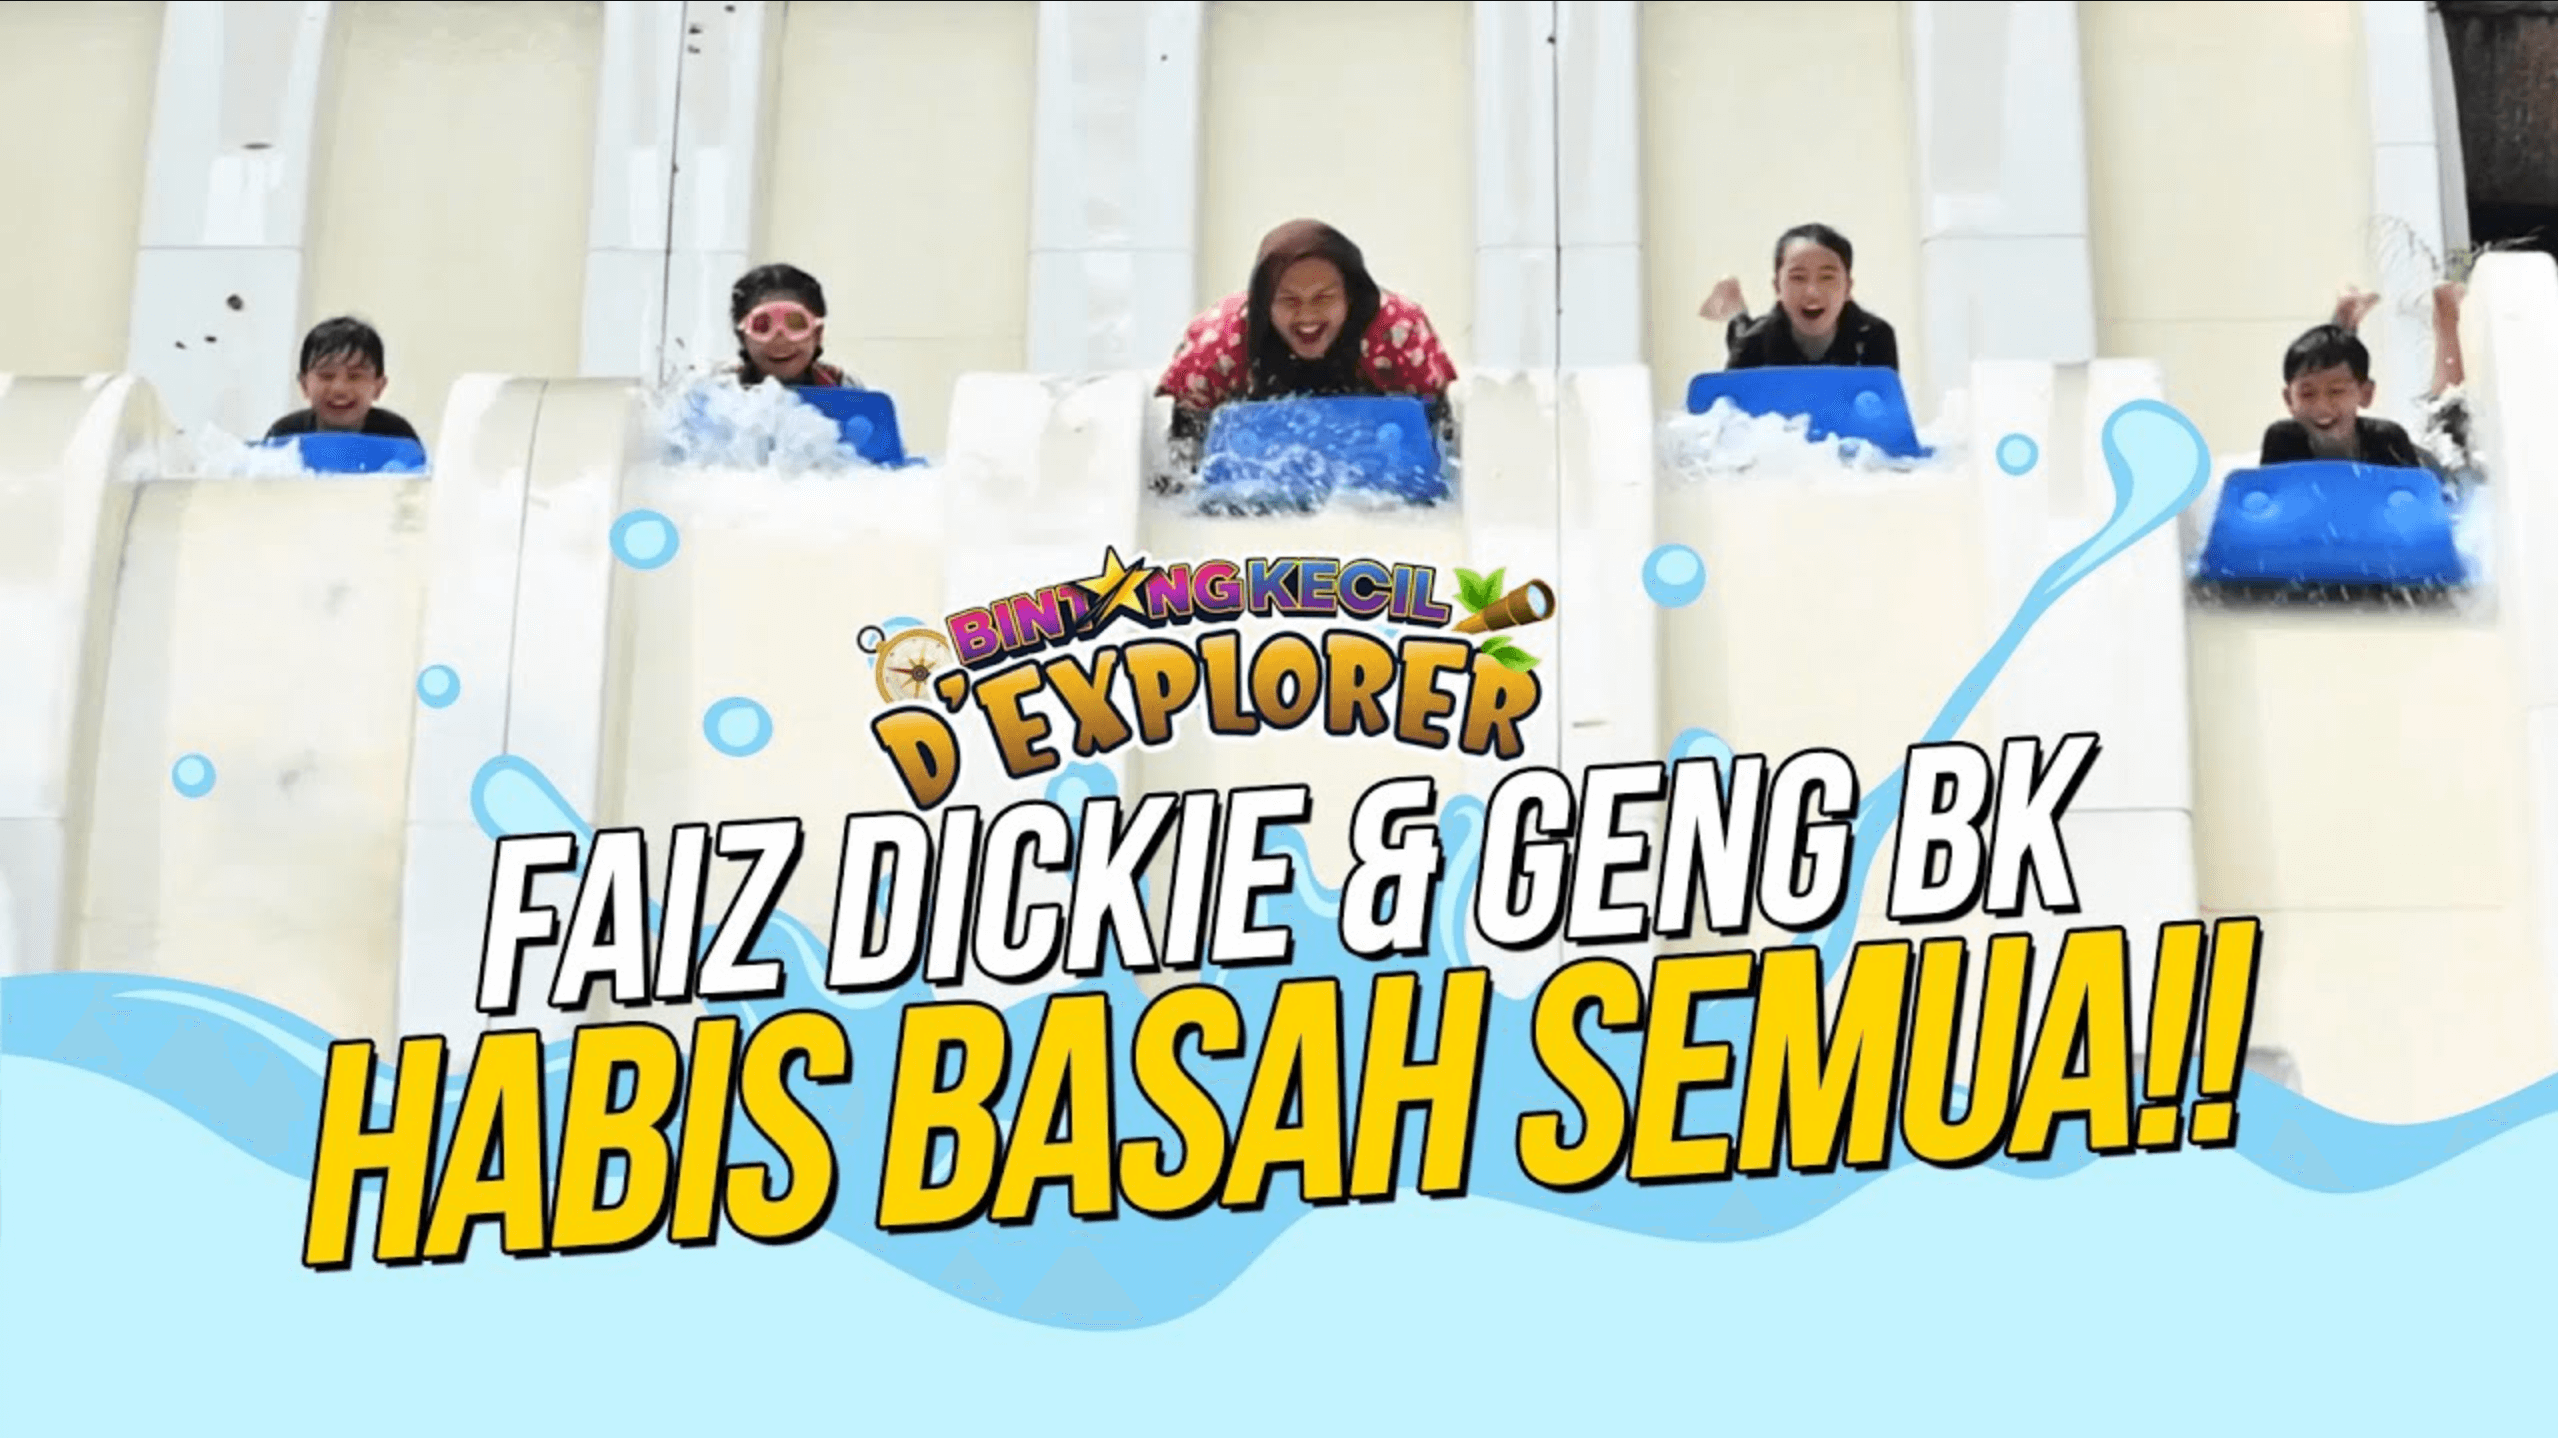 Faiz Dickie & Geng BK HABIS BASAH Semua! | BK D’Explorer EP 3 | BINTANG KECIL